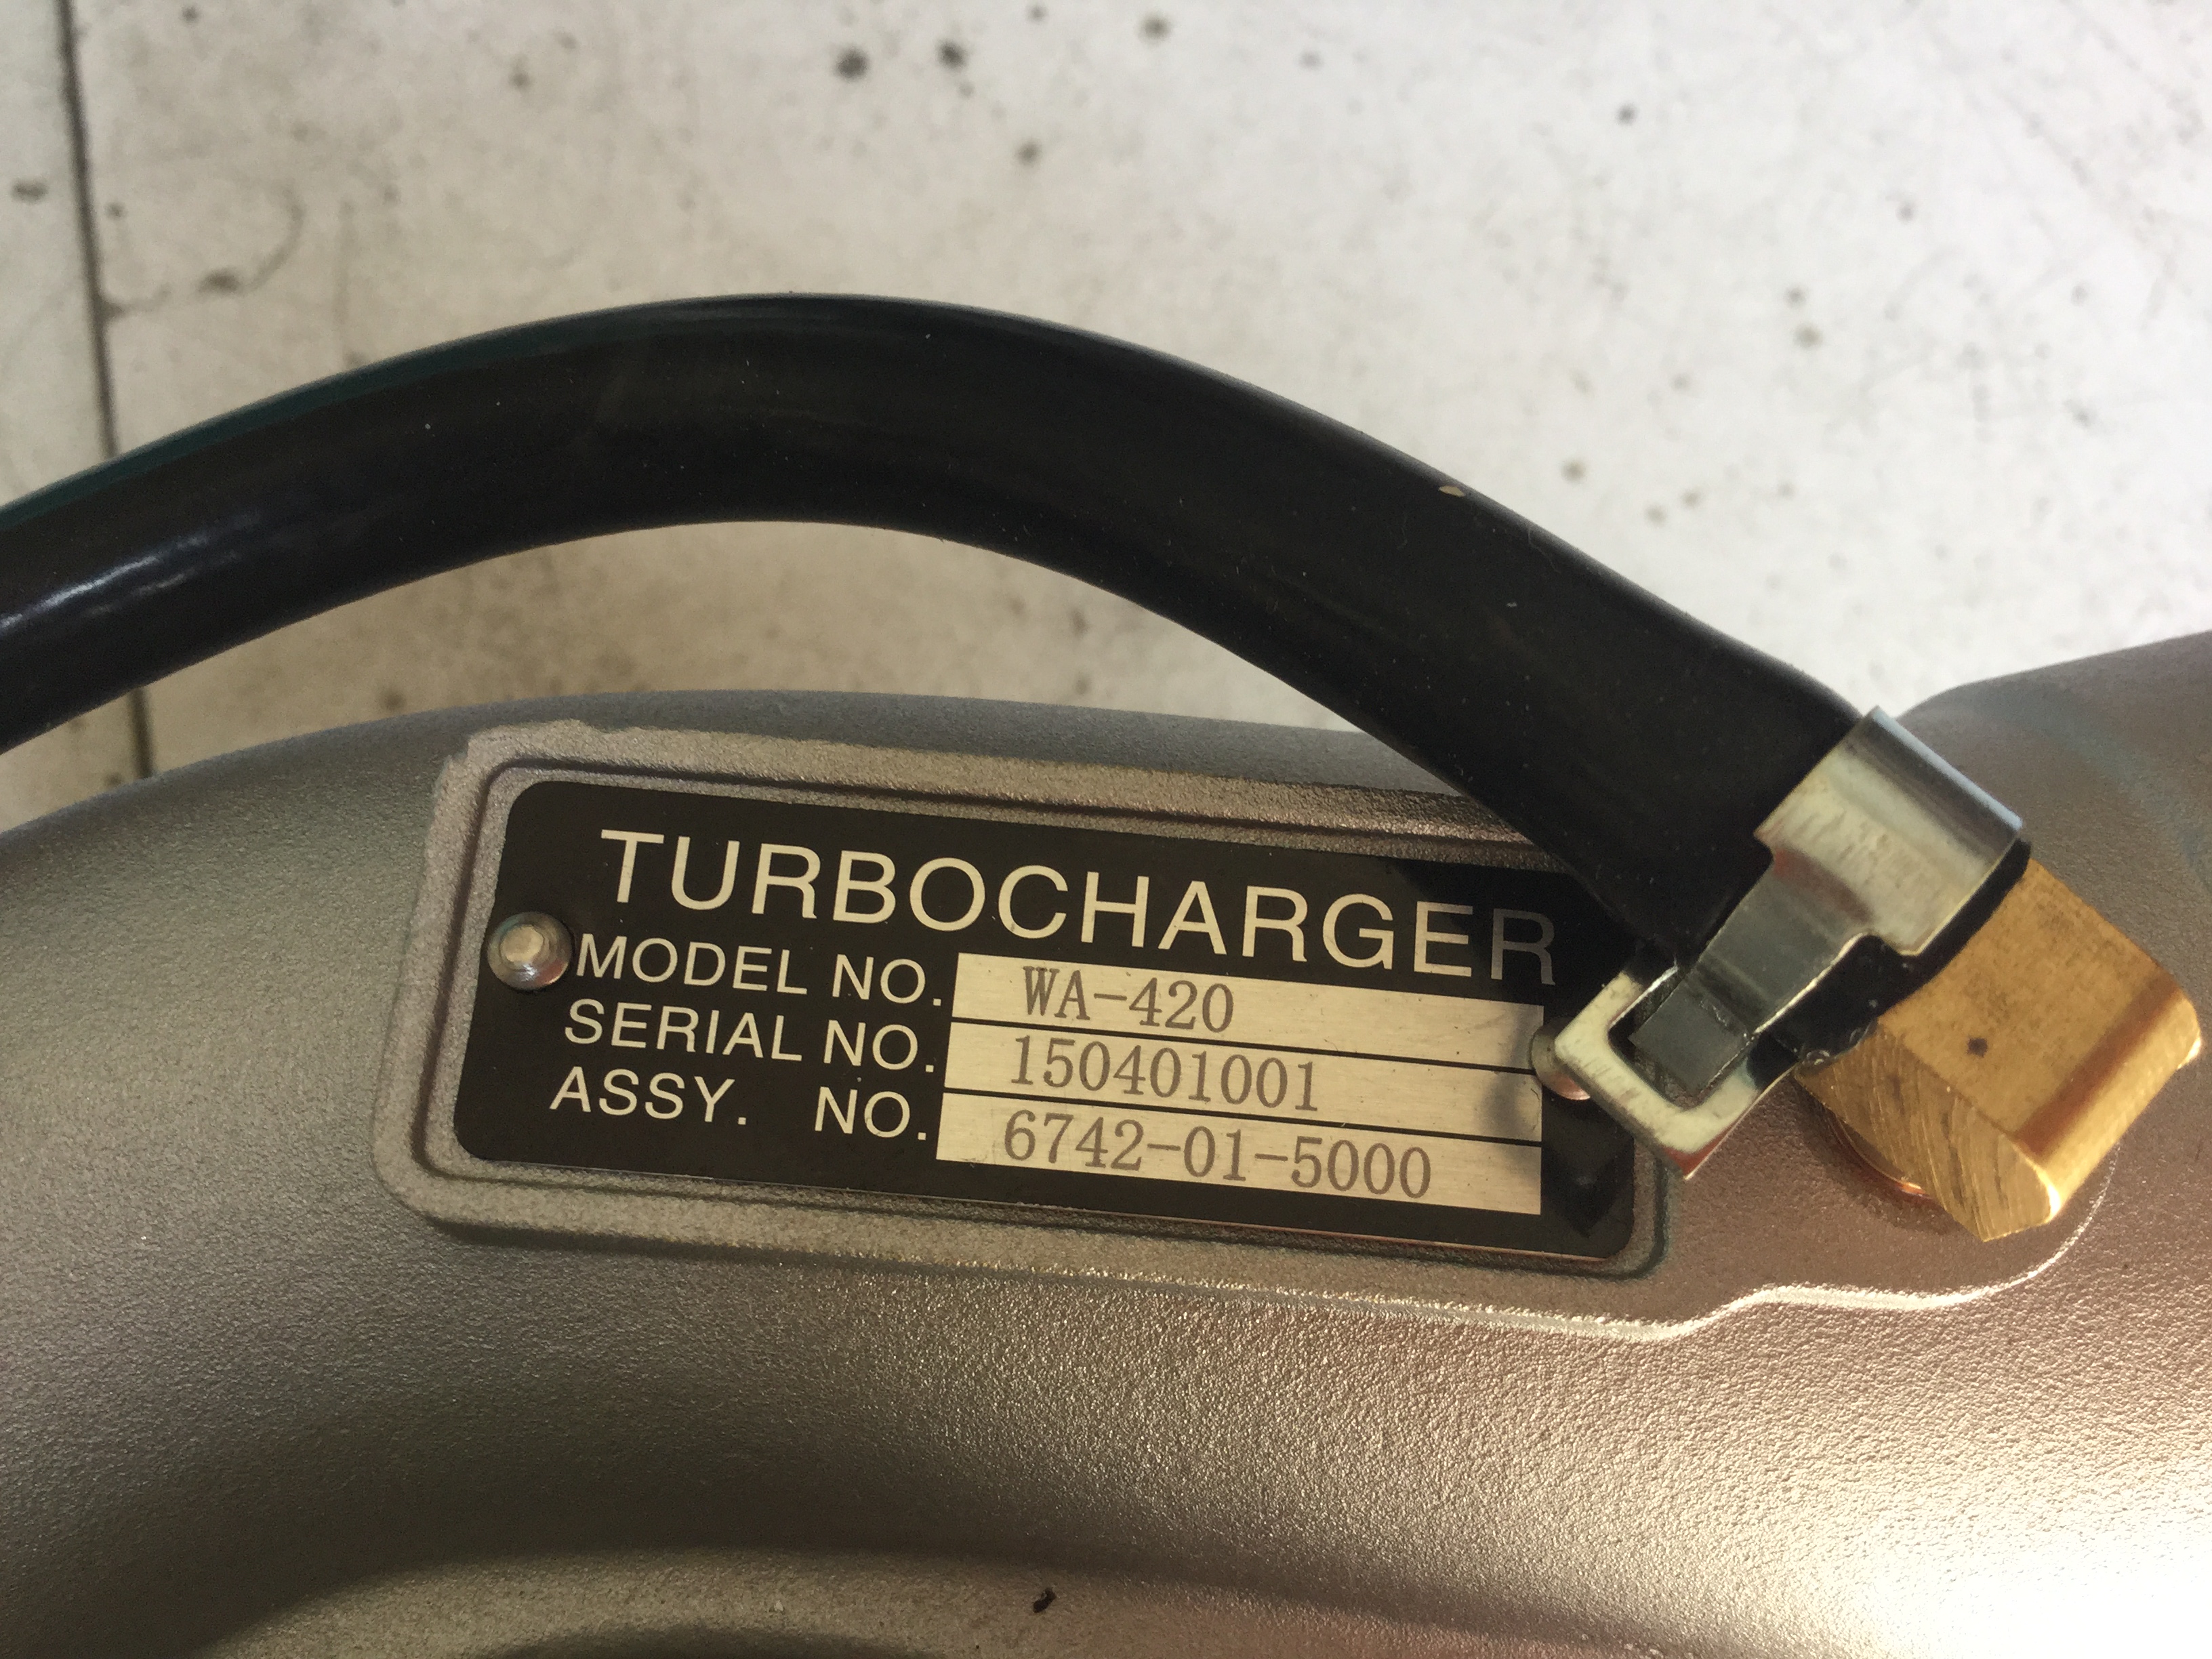 Turbocharger 6742-01-5000 for Cummins HX40W Engine